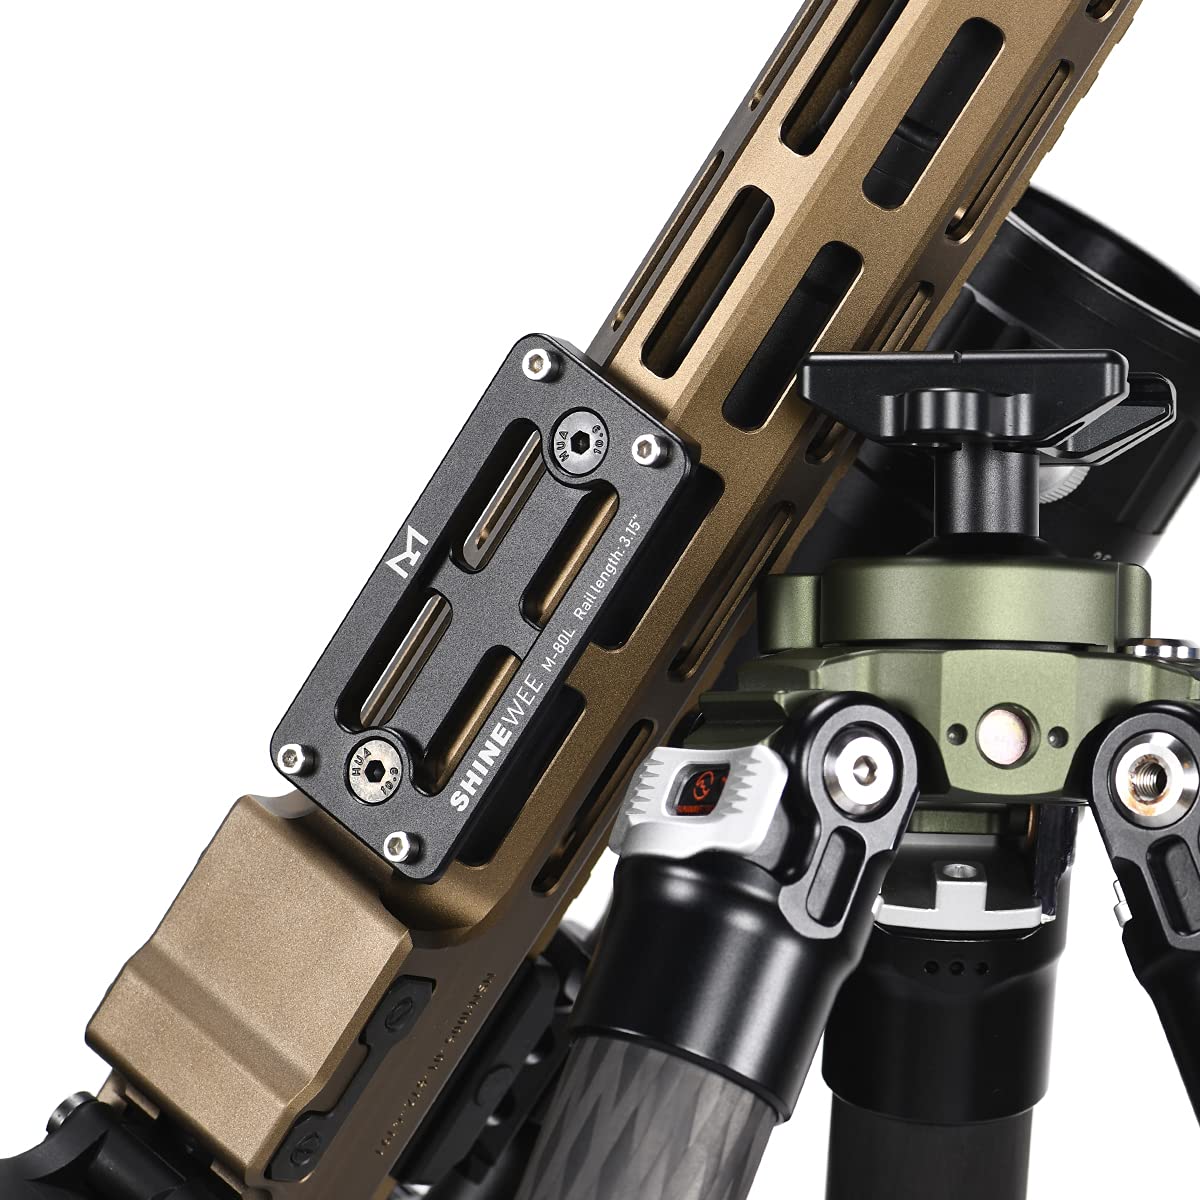 MLOK Arca Rail Tripod Mount Adapter, for Rifle Tripod Ballhead Quick Release Plate,Compatiable RRS Dovetail, 2 M-LOK Slot Interface